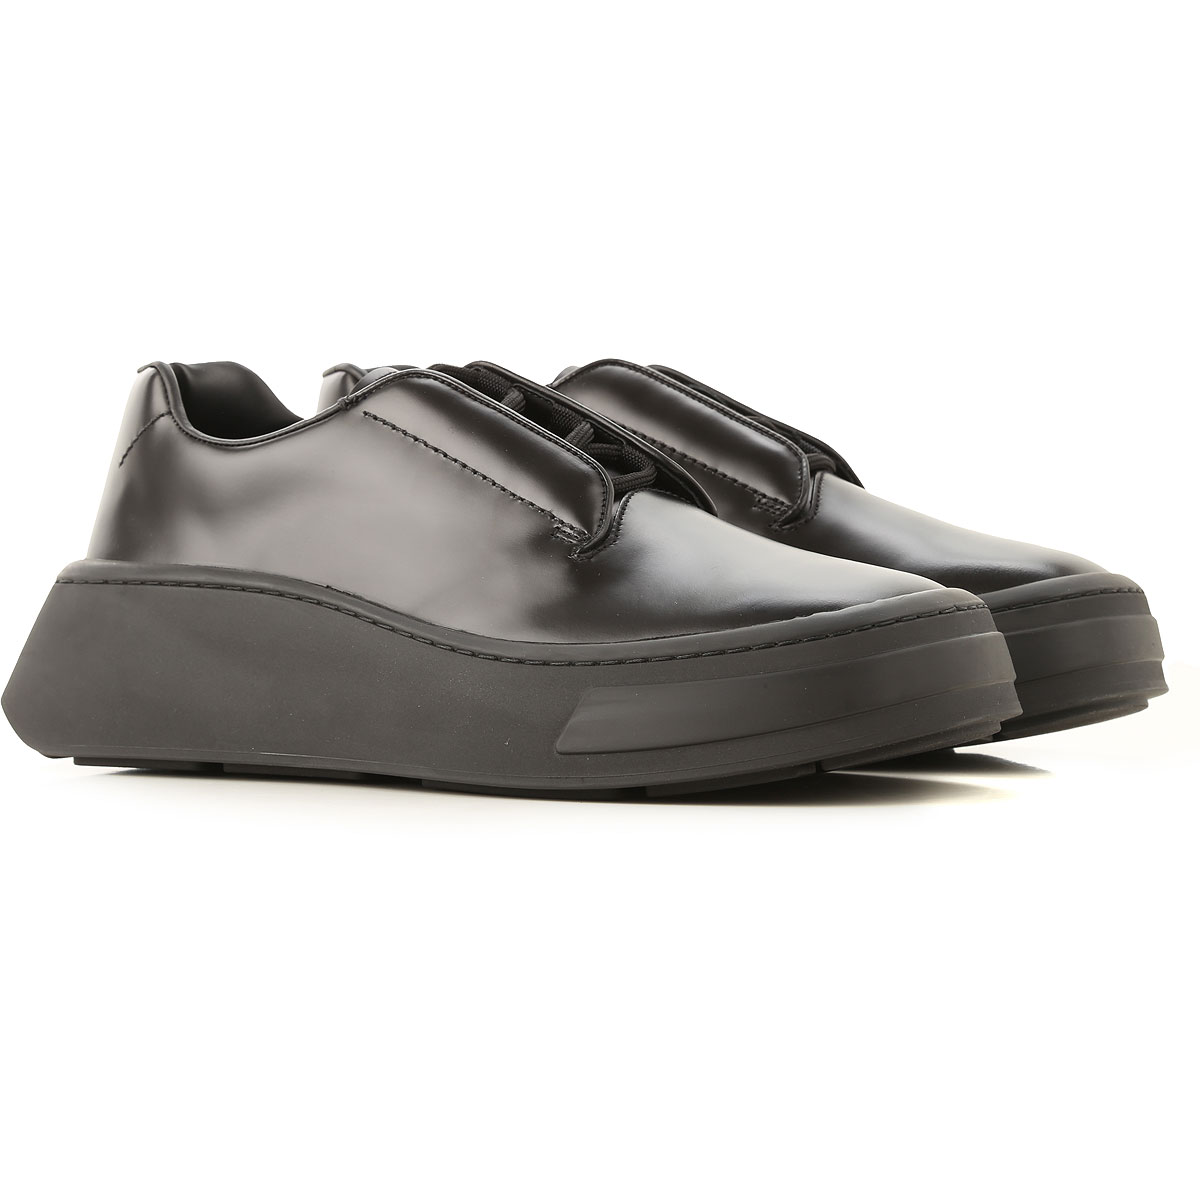 Mens Shoes Prada, Style code: 2eg312-b4l-f0002